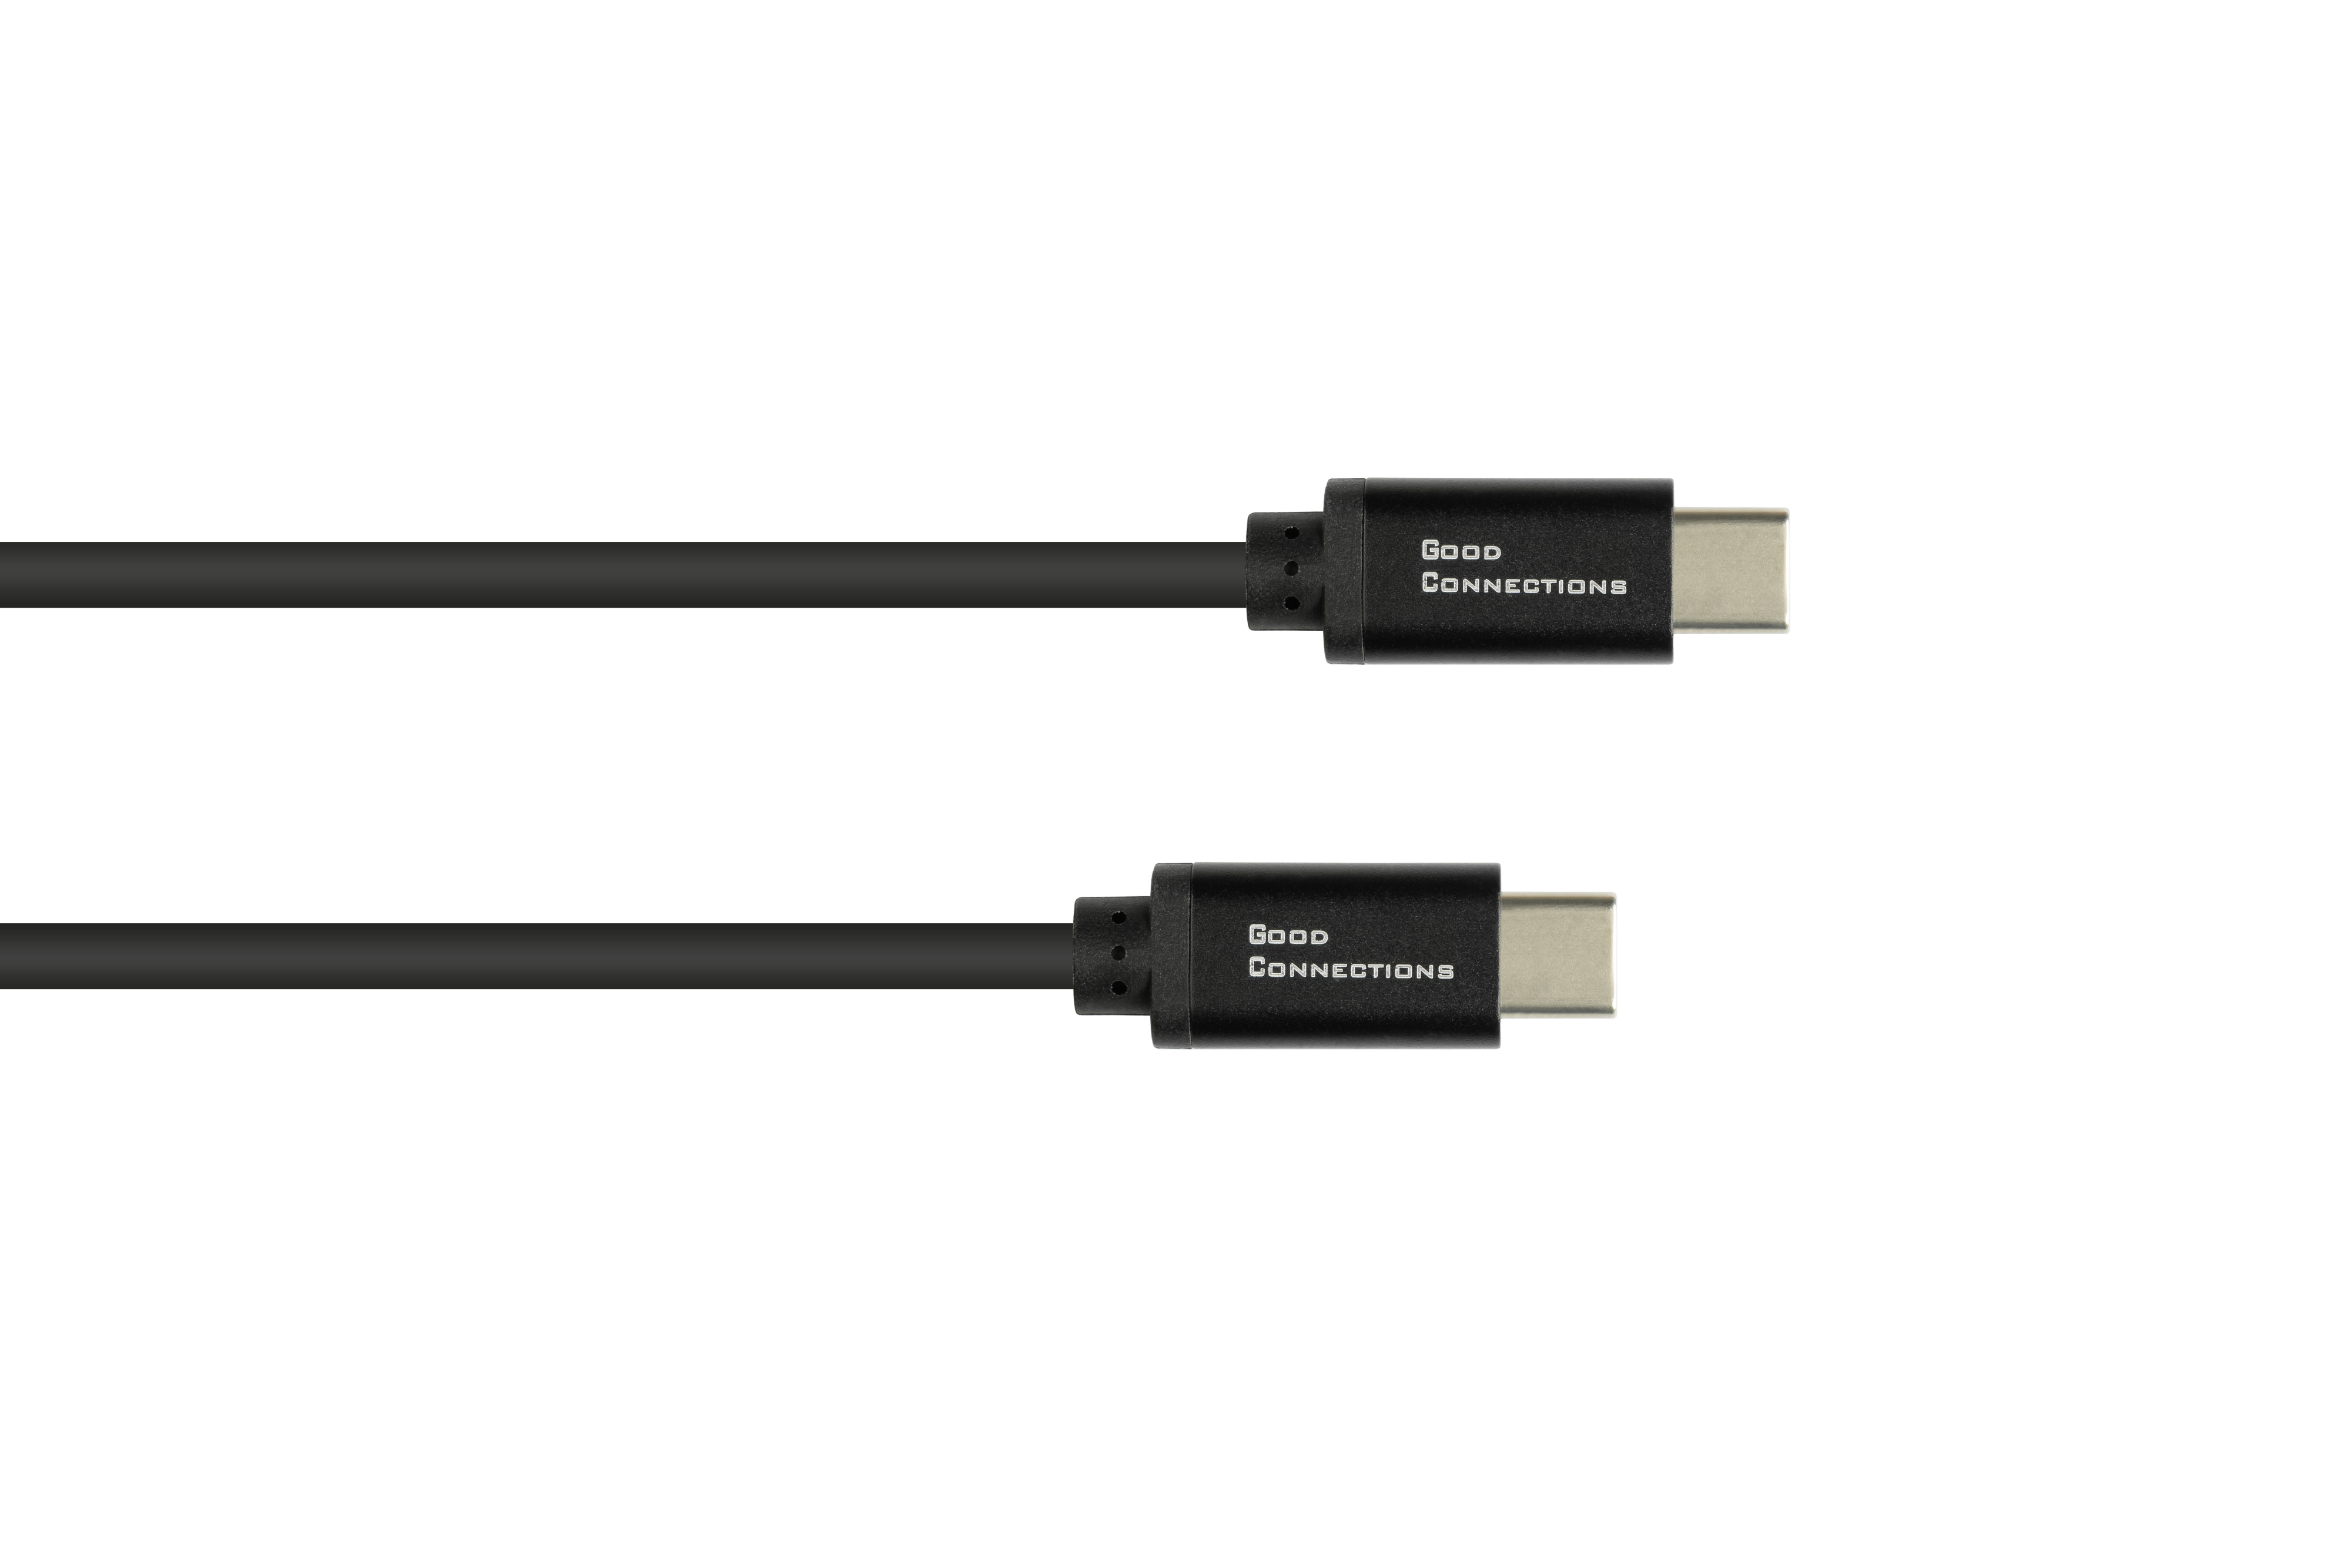 Lade- E-Marker, Power GOOD USB-C™ 5A und CONNECTIONS Datenkabe schwarz SmartFLEX mit USB 100W, Delivery 2.0, (PD3)